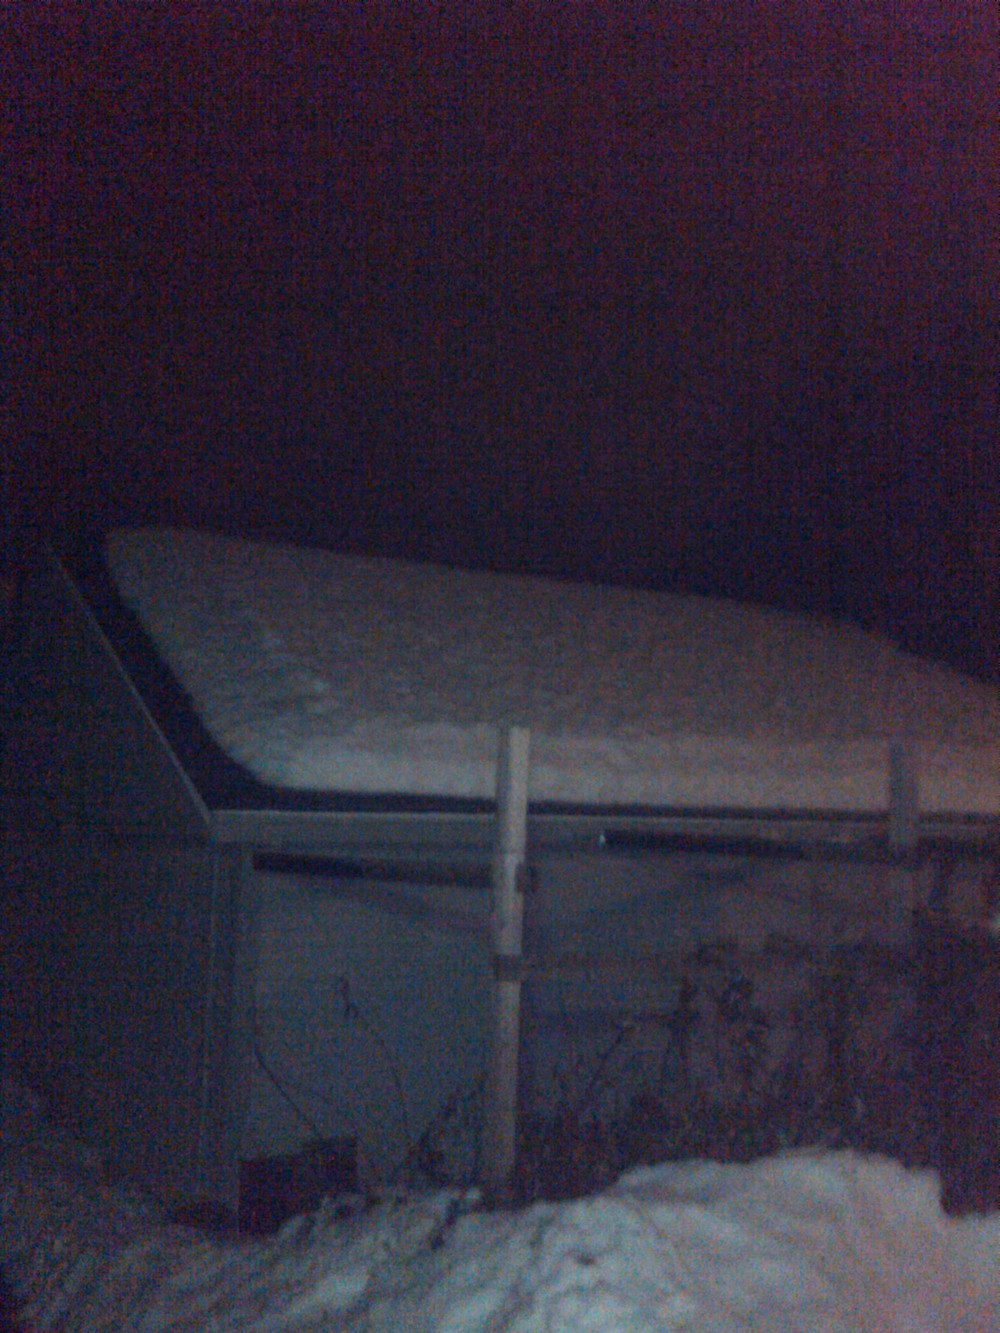  Snow on my garage's roof.